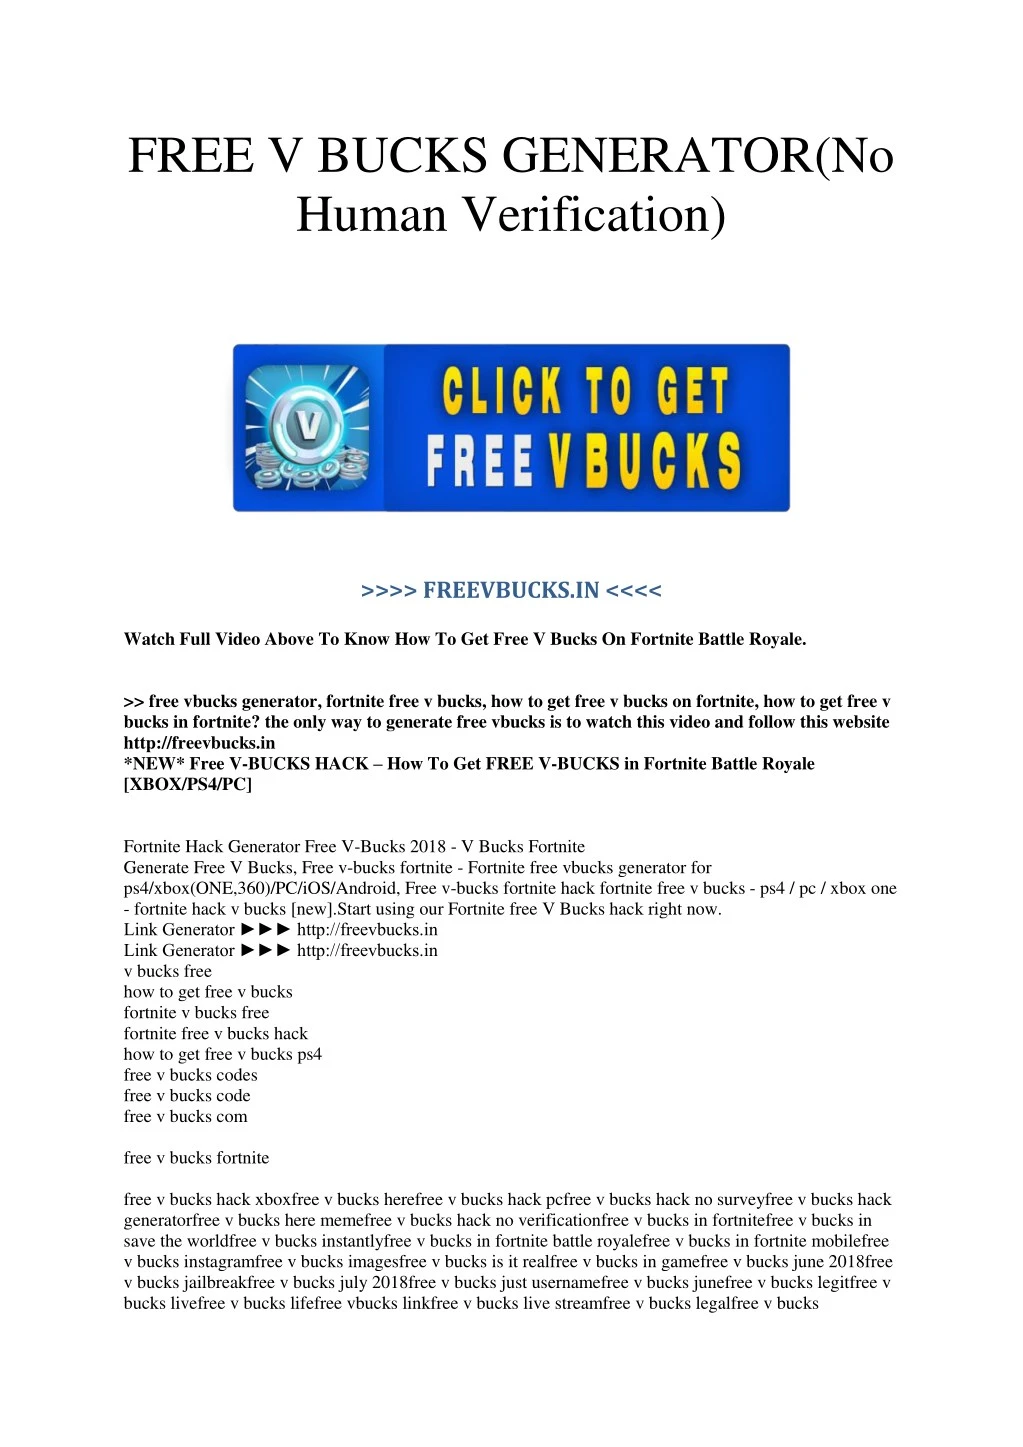 Ppt Free V Bucks Generator No Human Verification Powerpoint - free v bucks generator no human verification